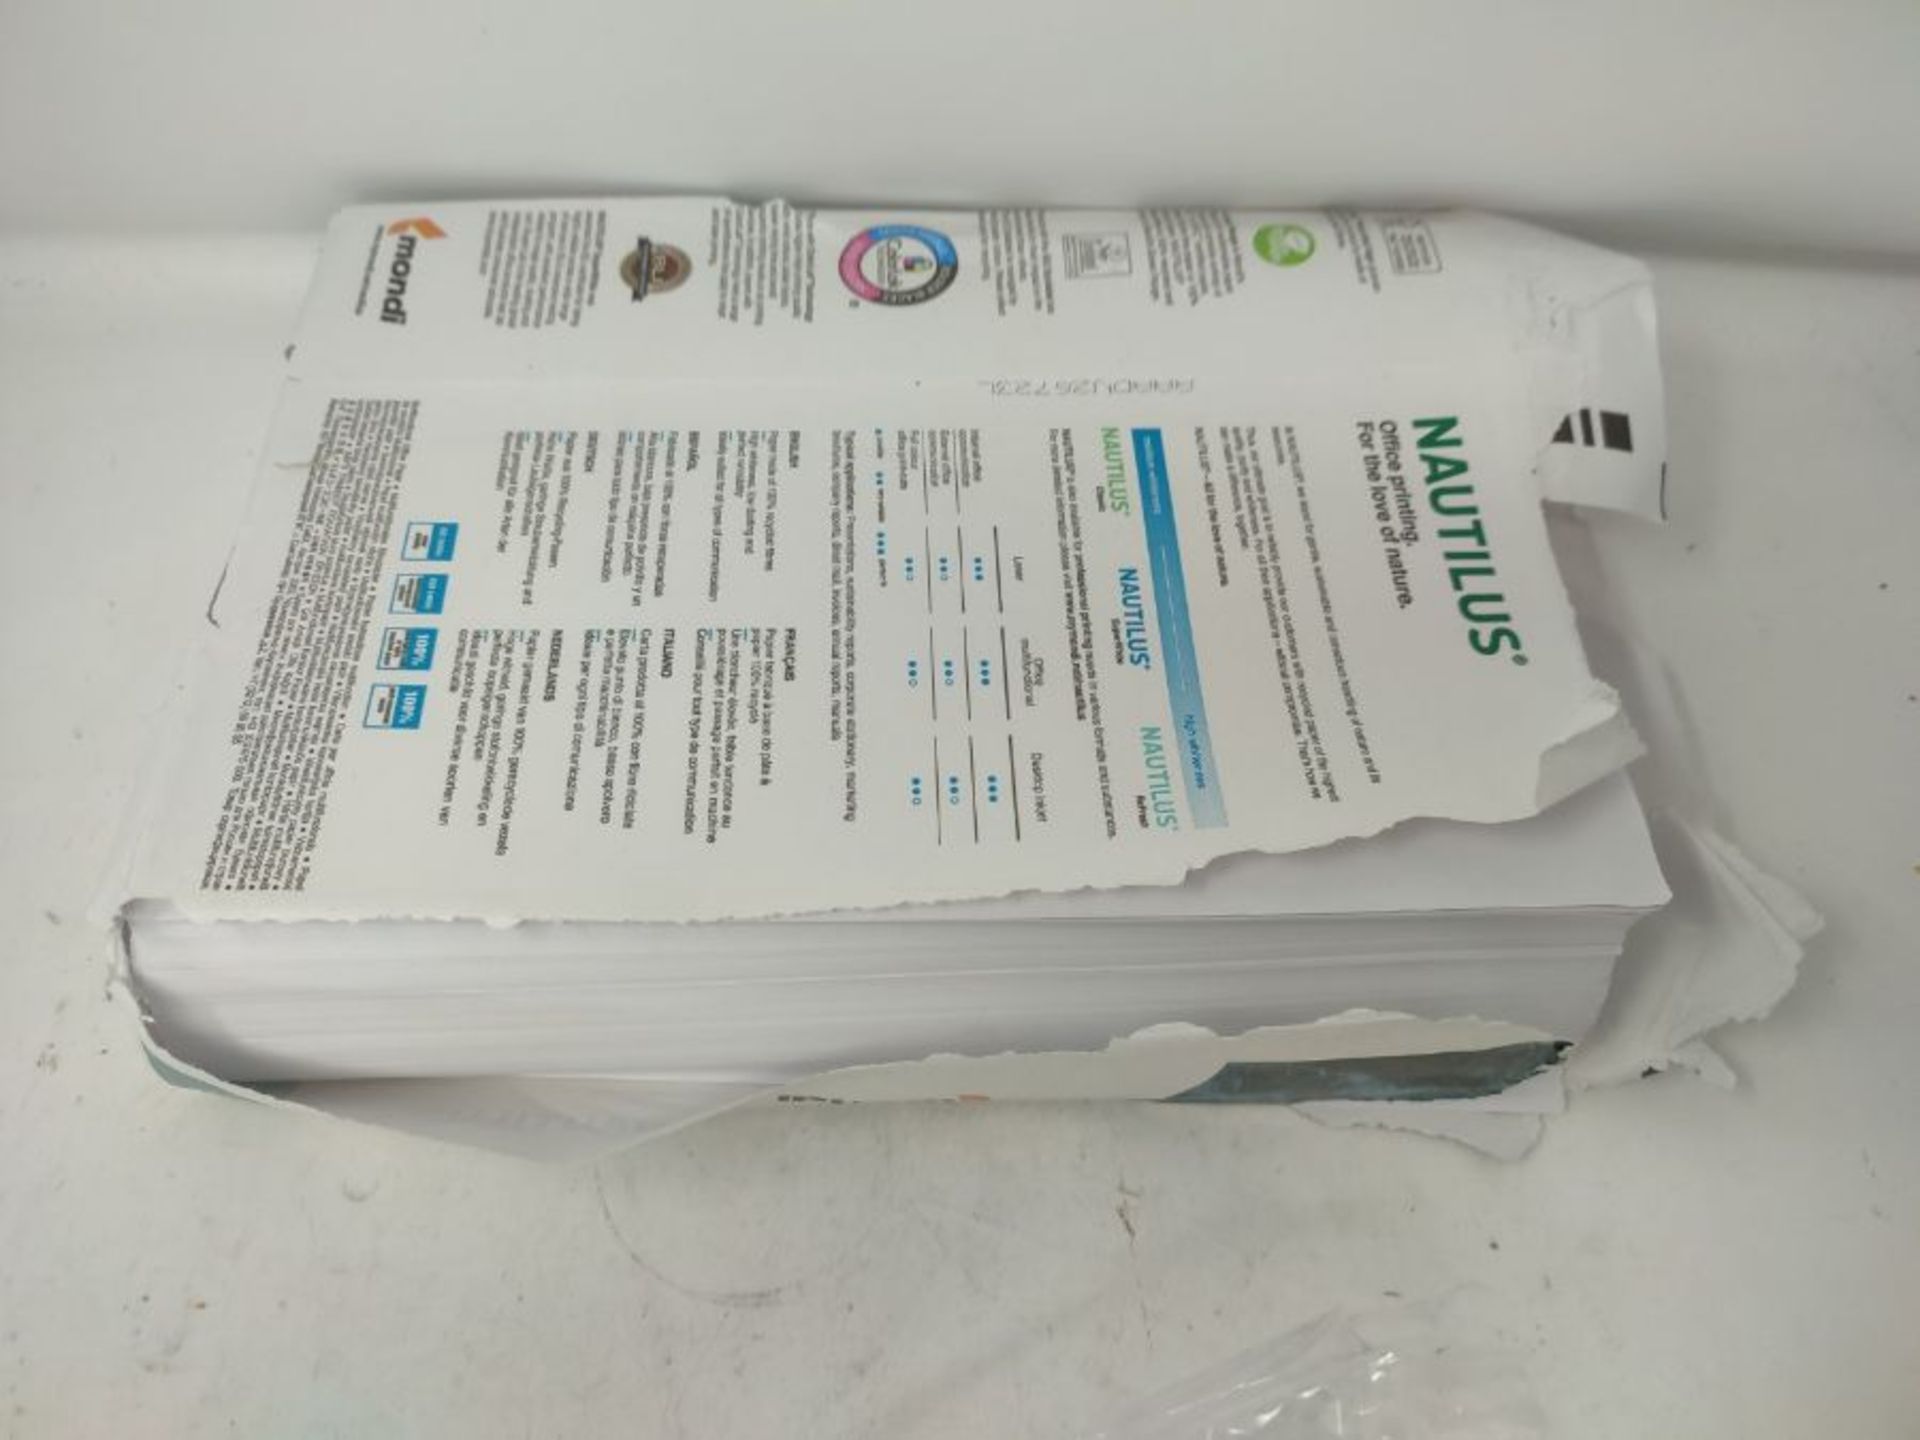 Mondi 88020366 Multi-Function Paper Nautilus Superwhite 80 g/m? A4 500 Sheets White - Image 2 of 2